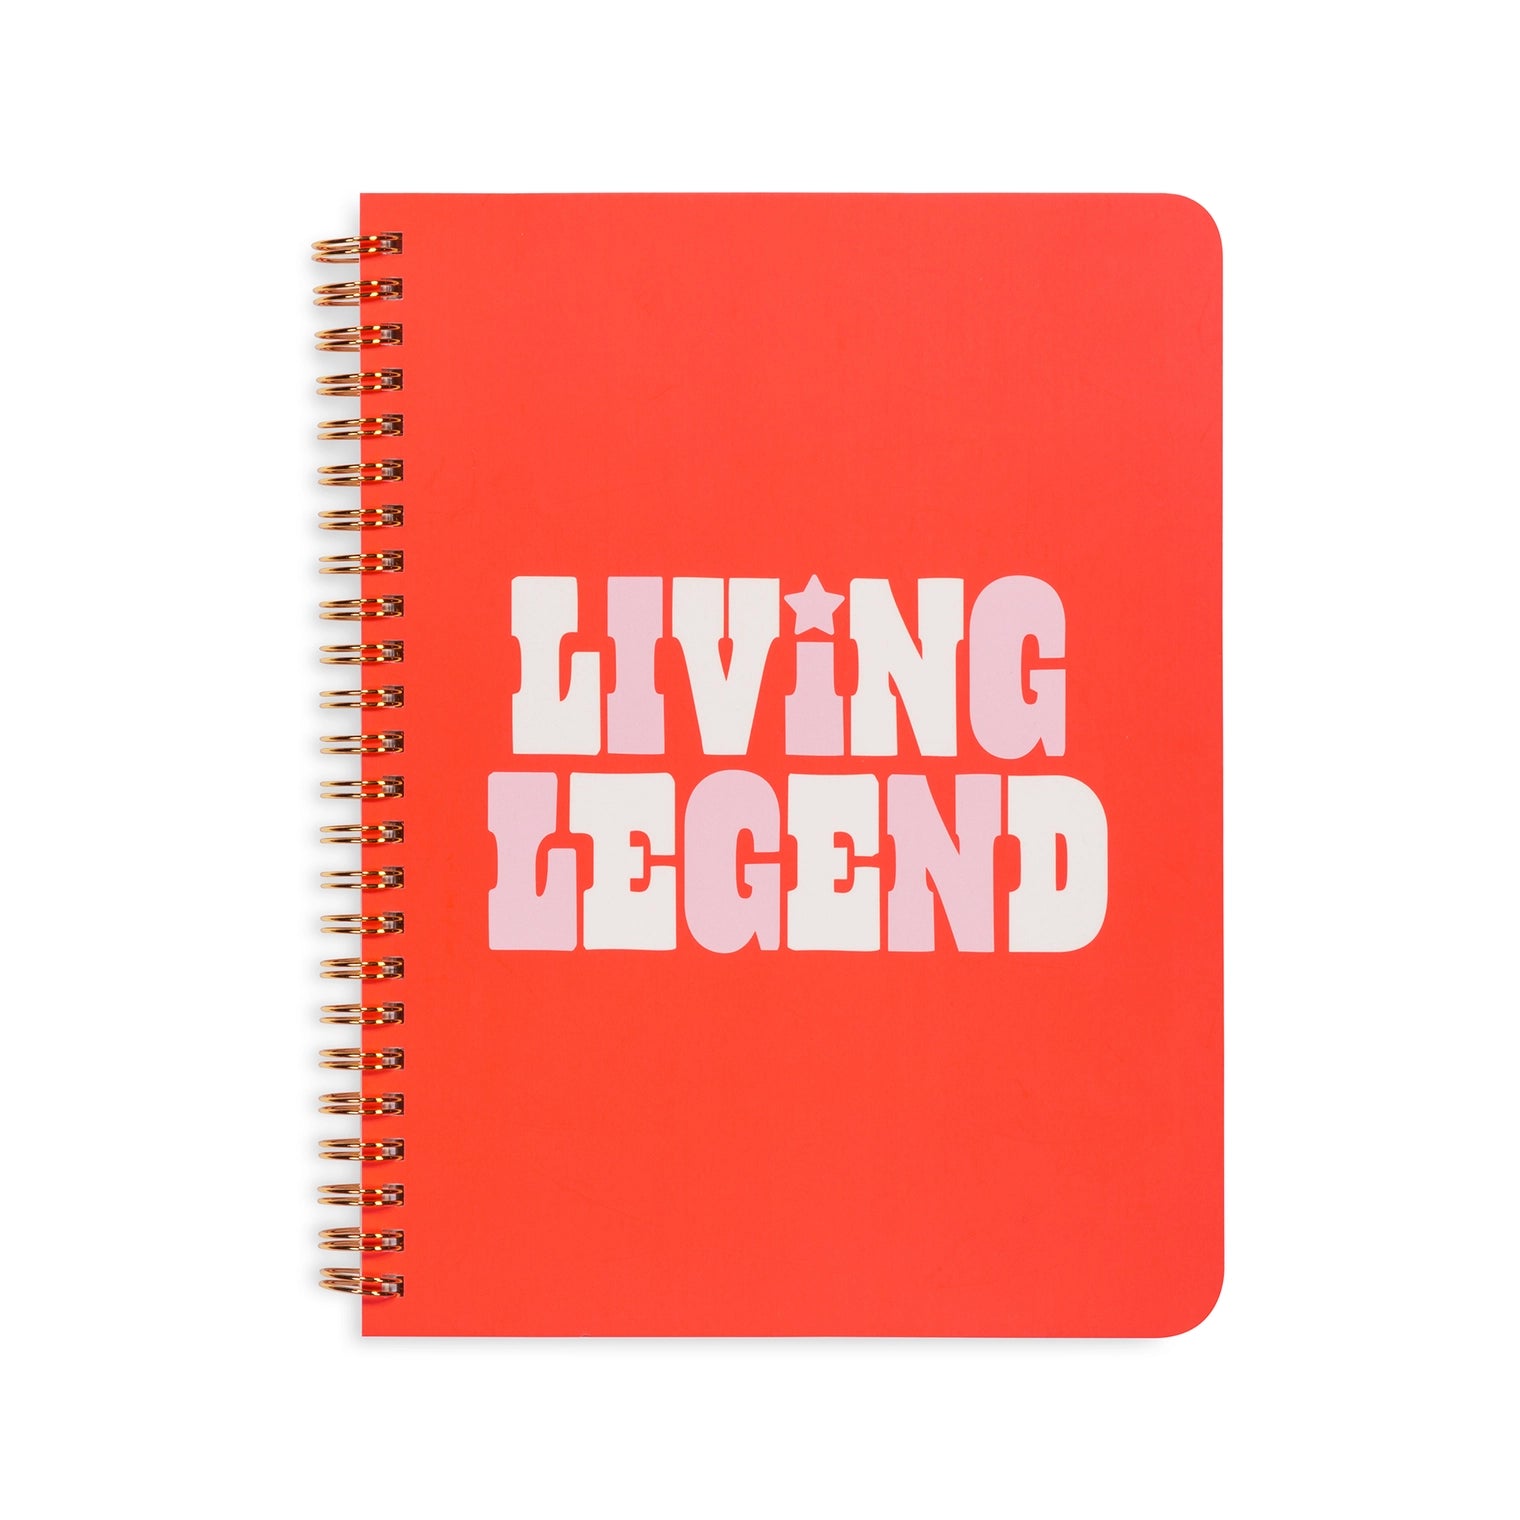 Living Legend notebook cover